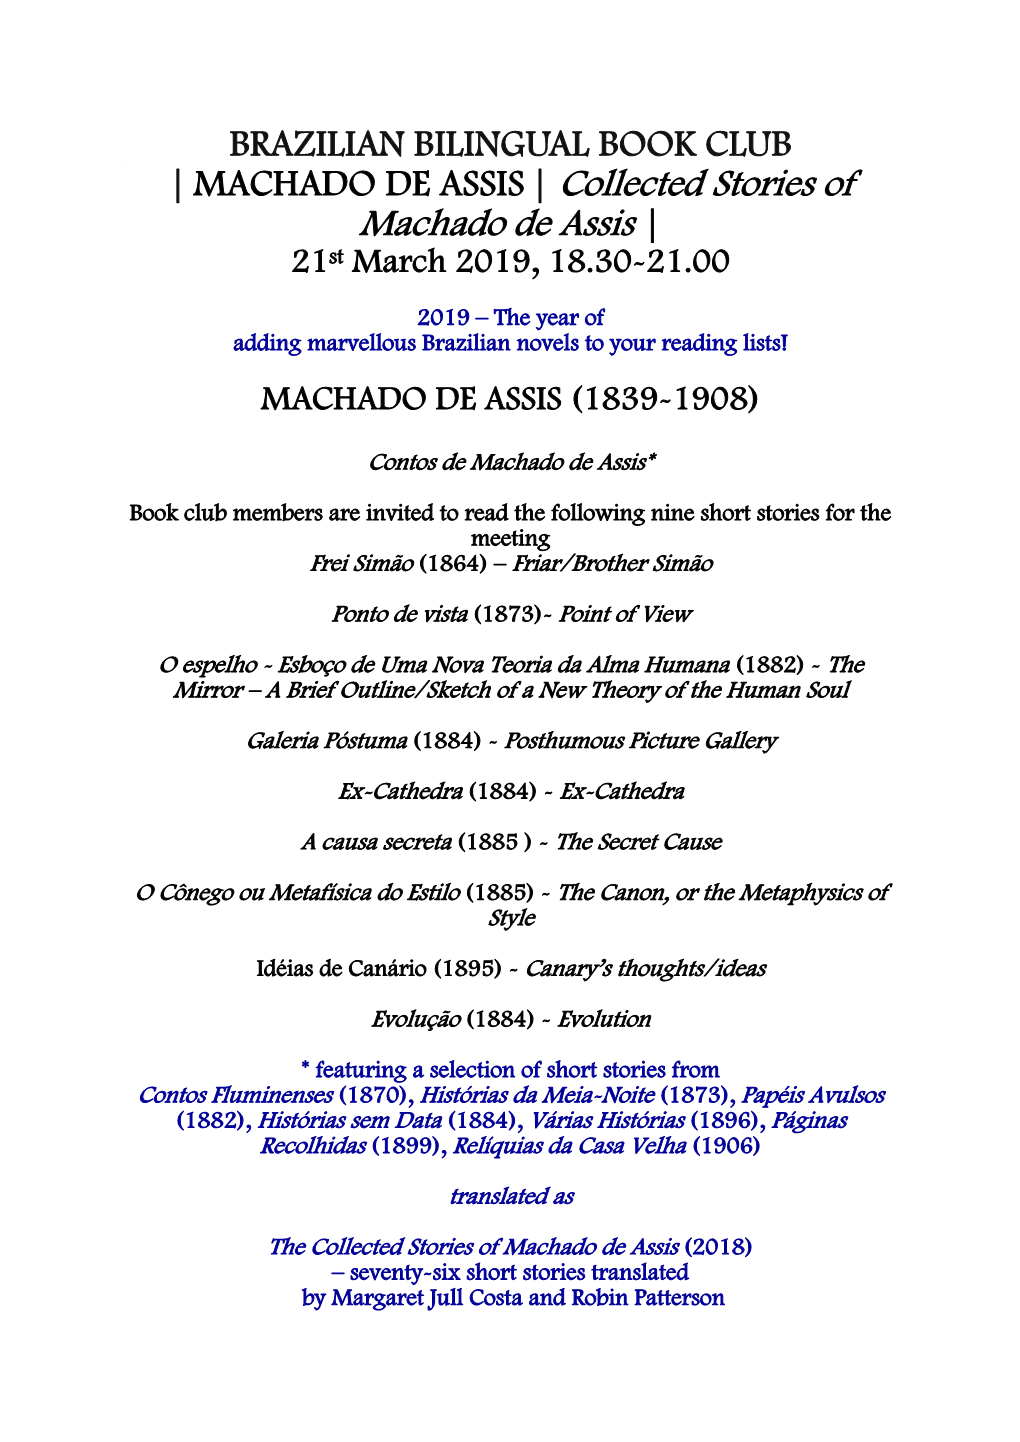 MACHADO DE ASSIS | Collected Stories of Machado De Assis | 21St March 2019, 18.30-21.00